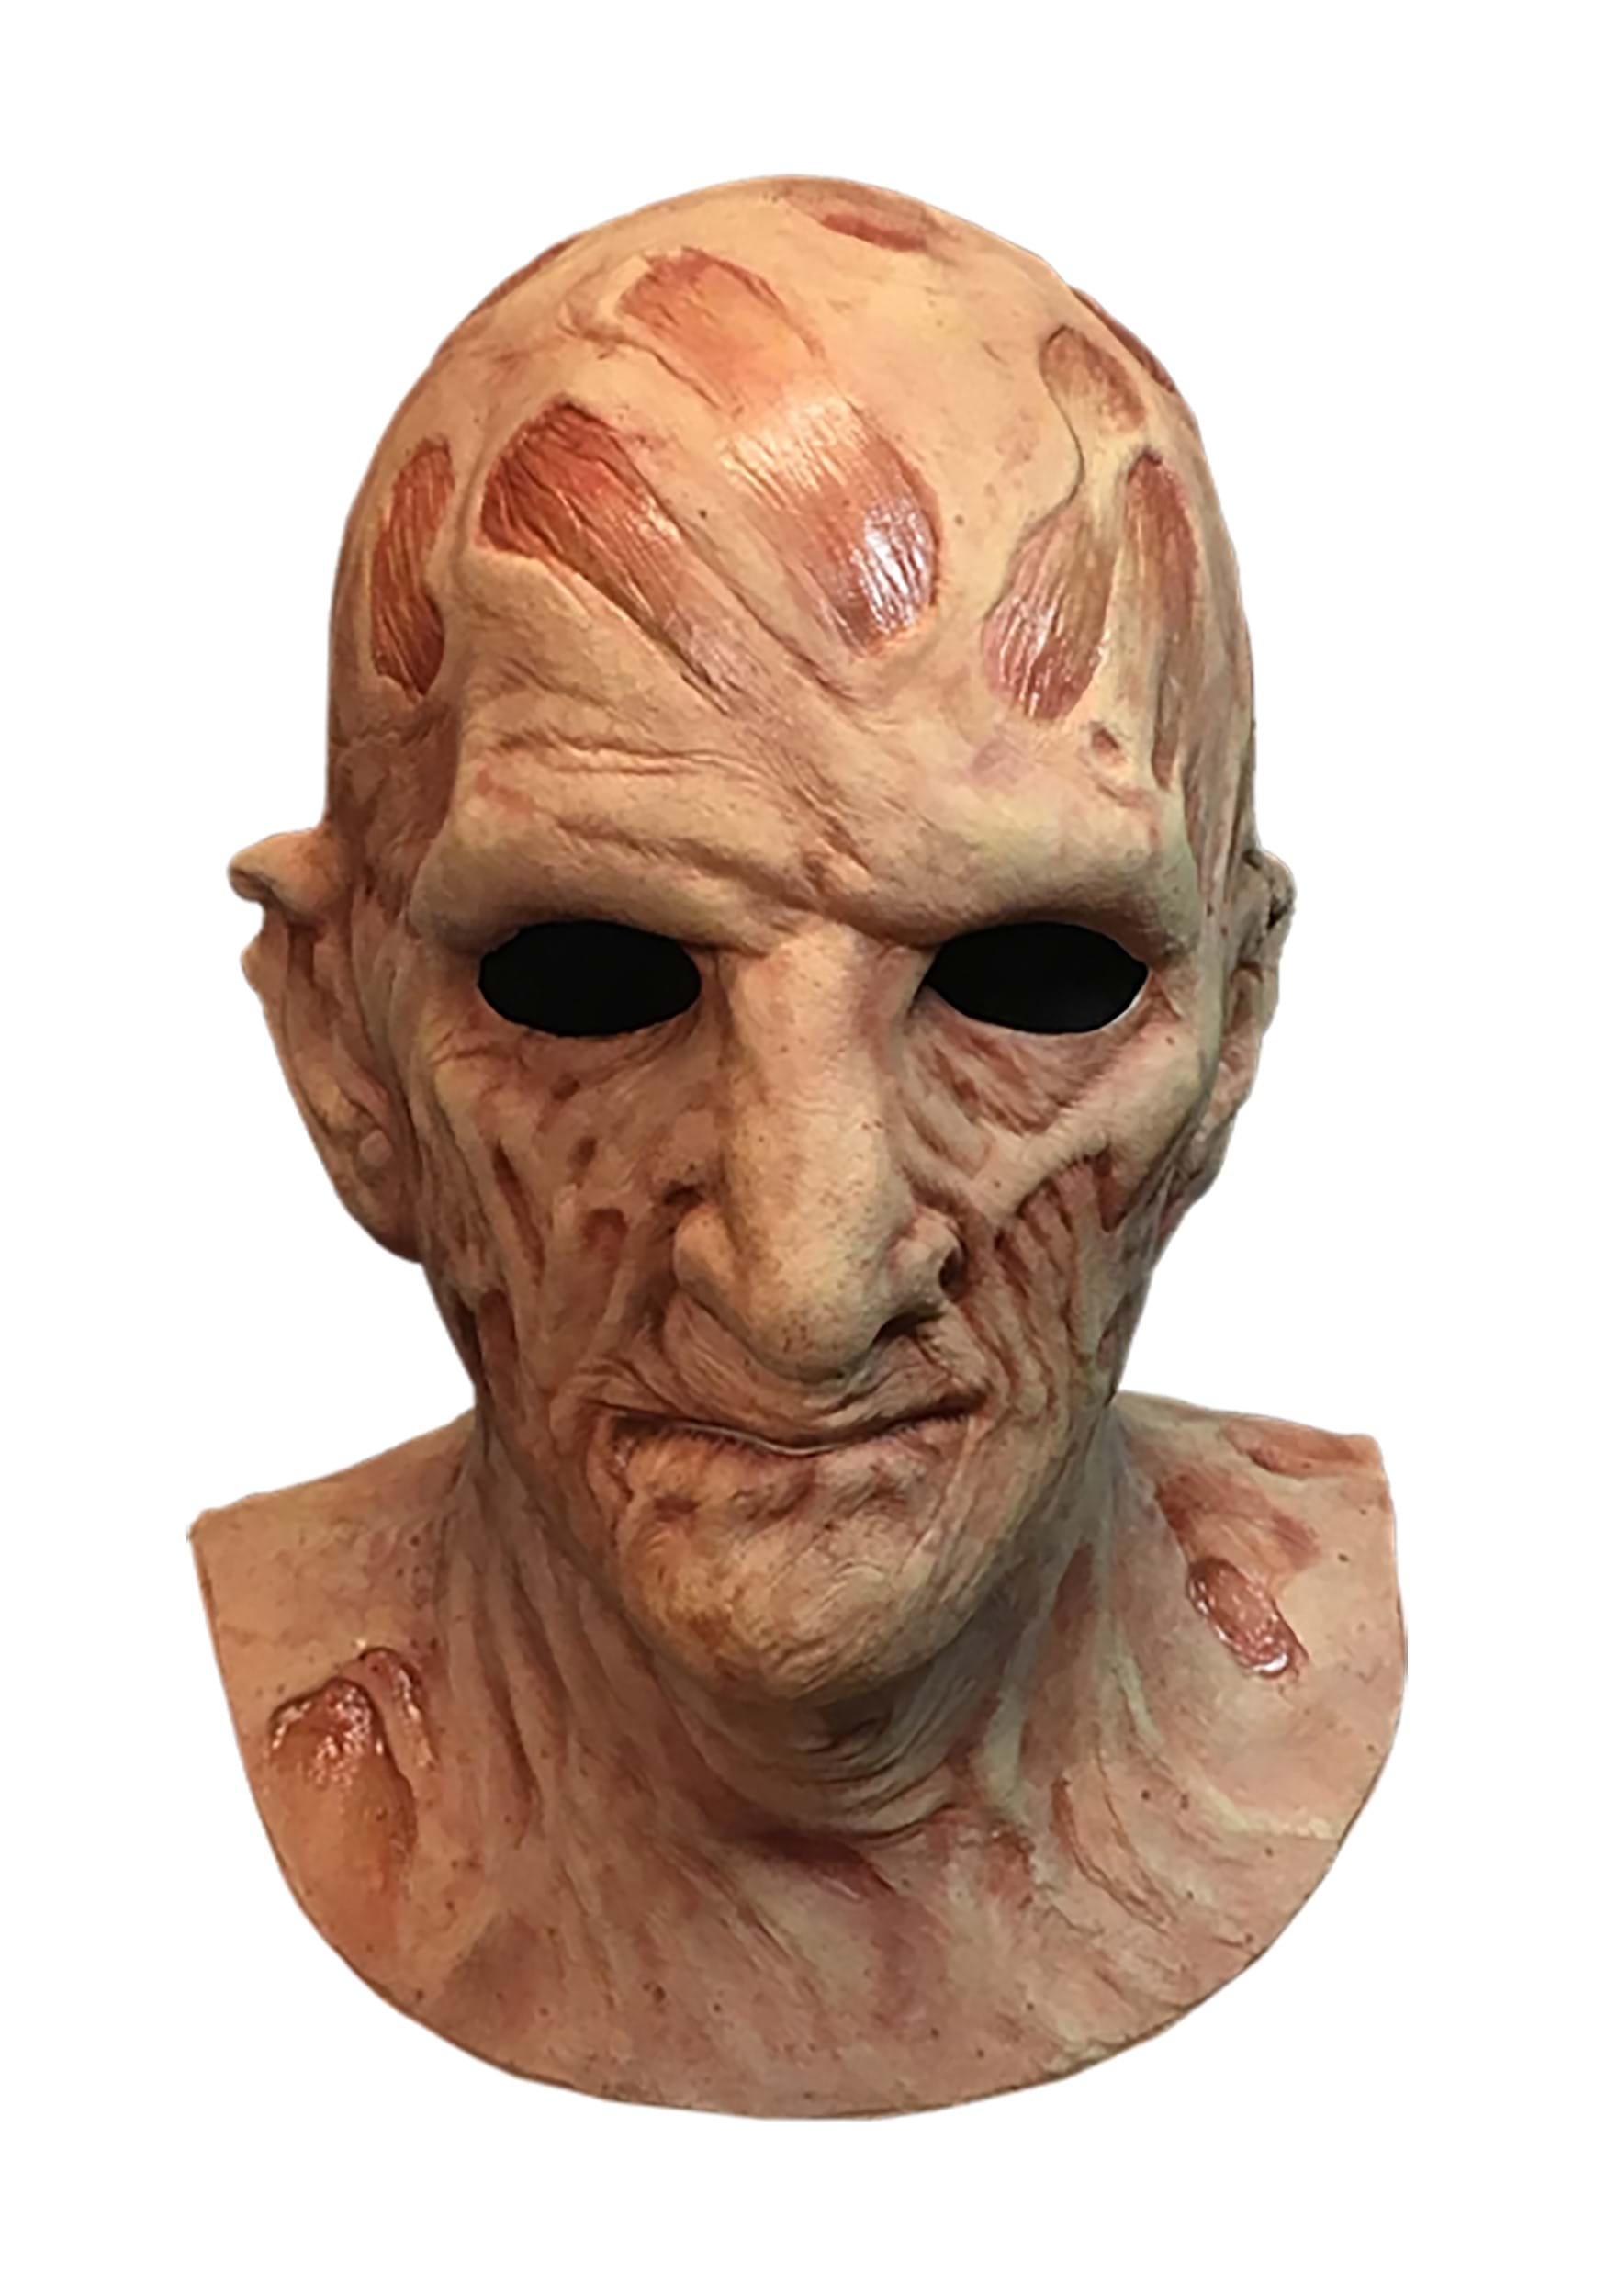 A Nightmare on Elm Street Freddys Revenge Costume Mask